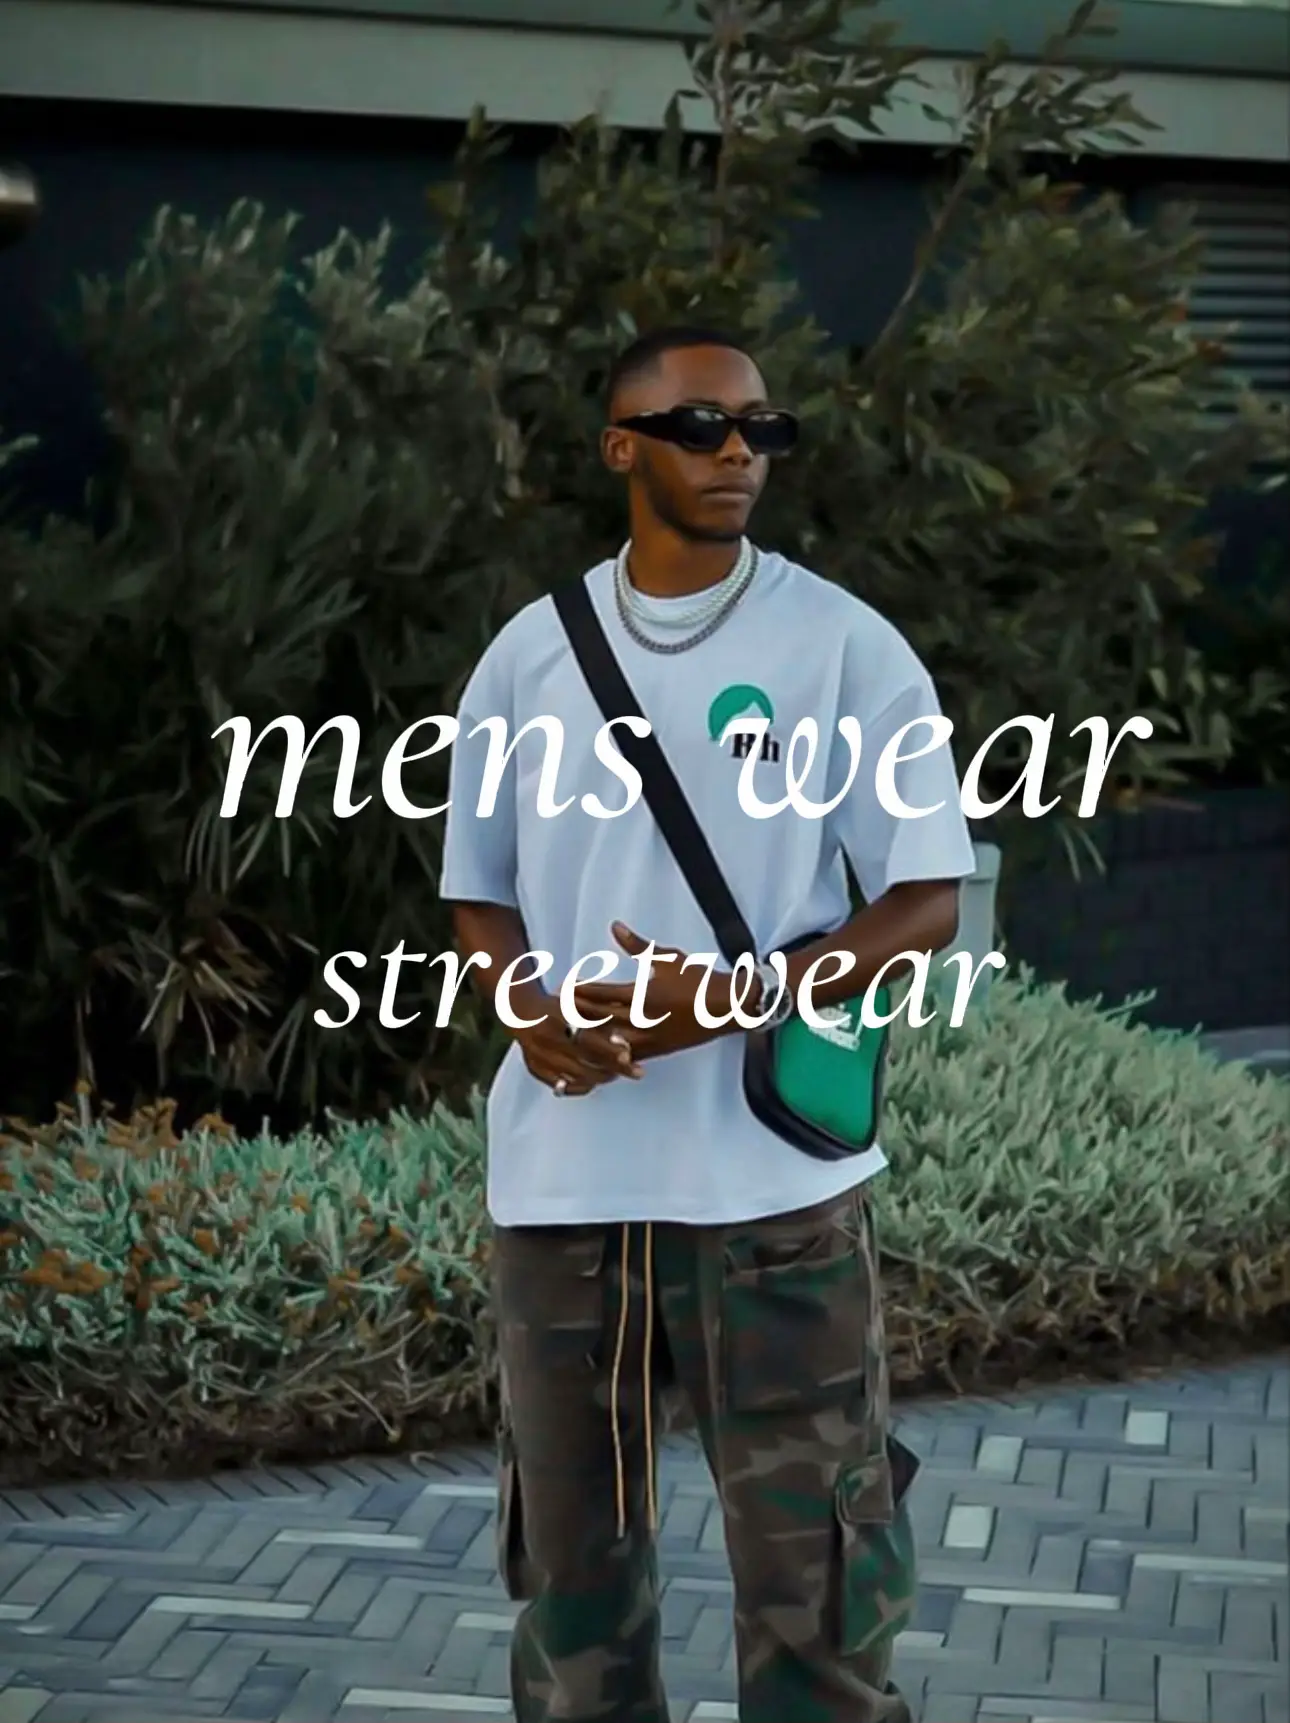 Corsets for Men  Genderless fashion, Men wearing dresses, Alt fashion